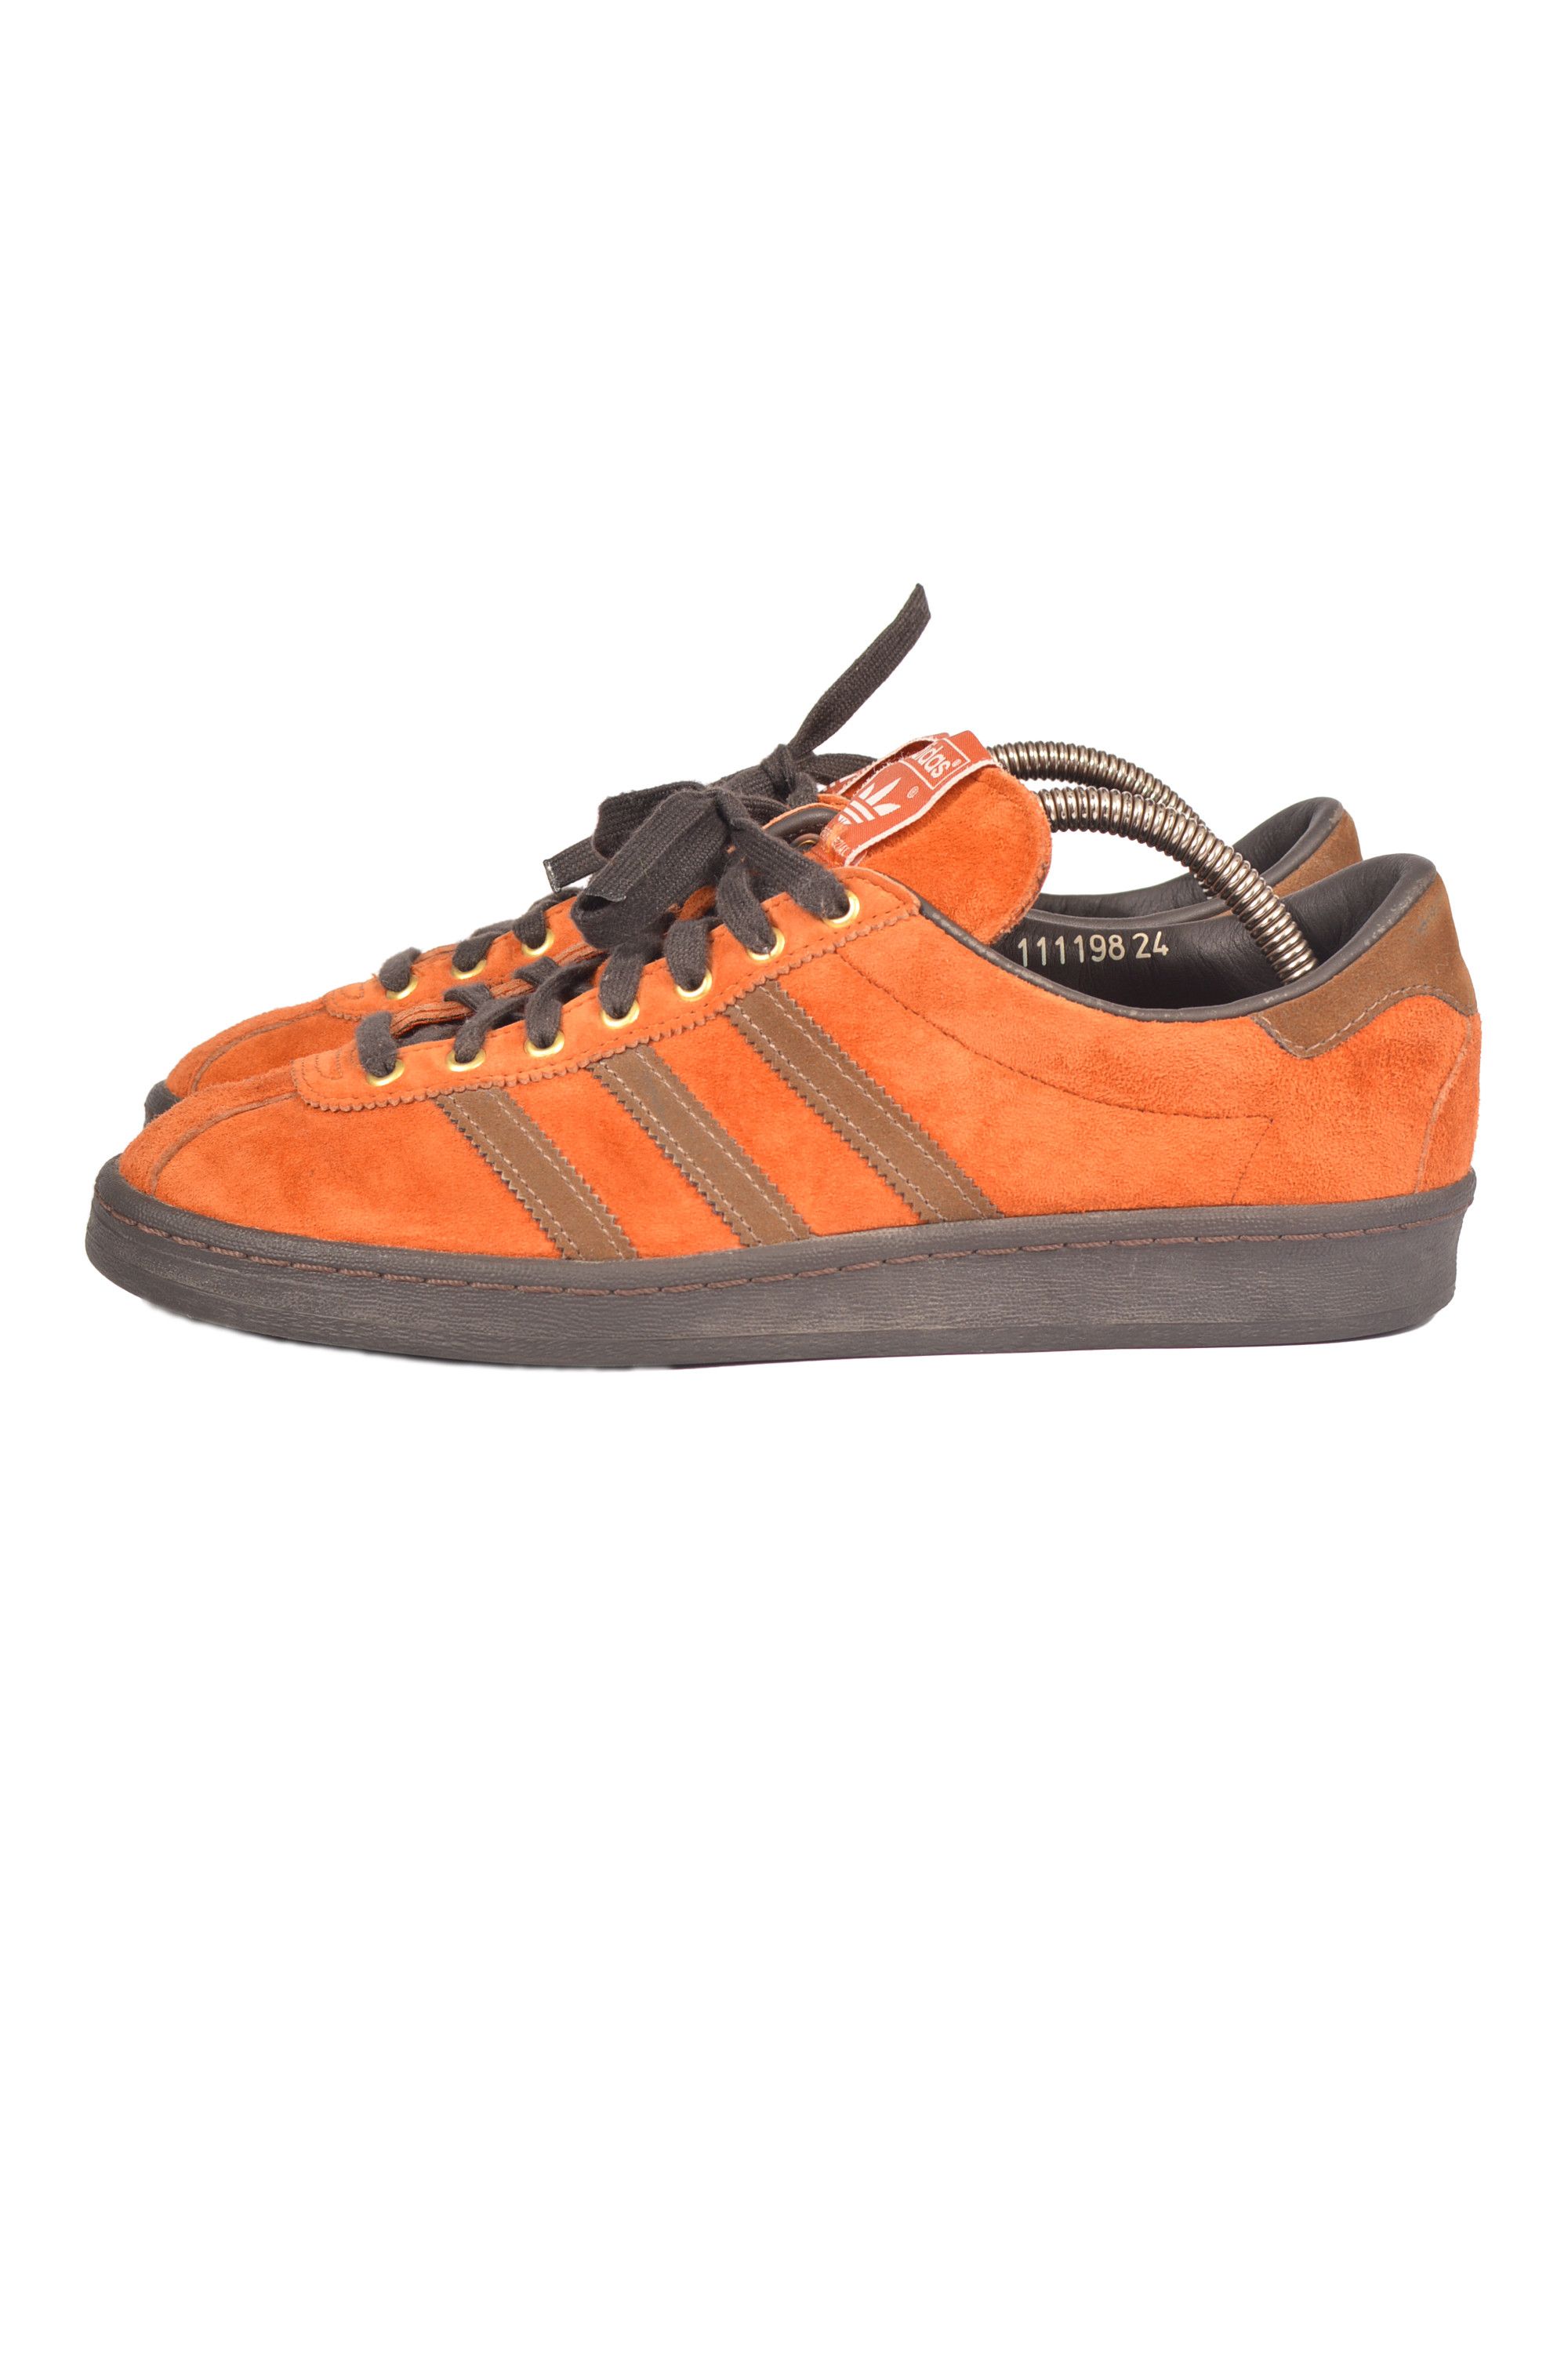 Adidas Adidas Arkesden Spzl Orange | Grailed